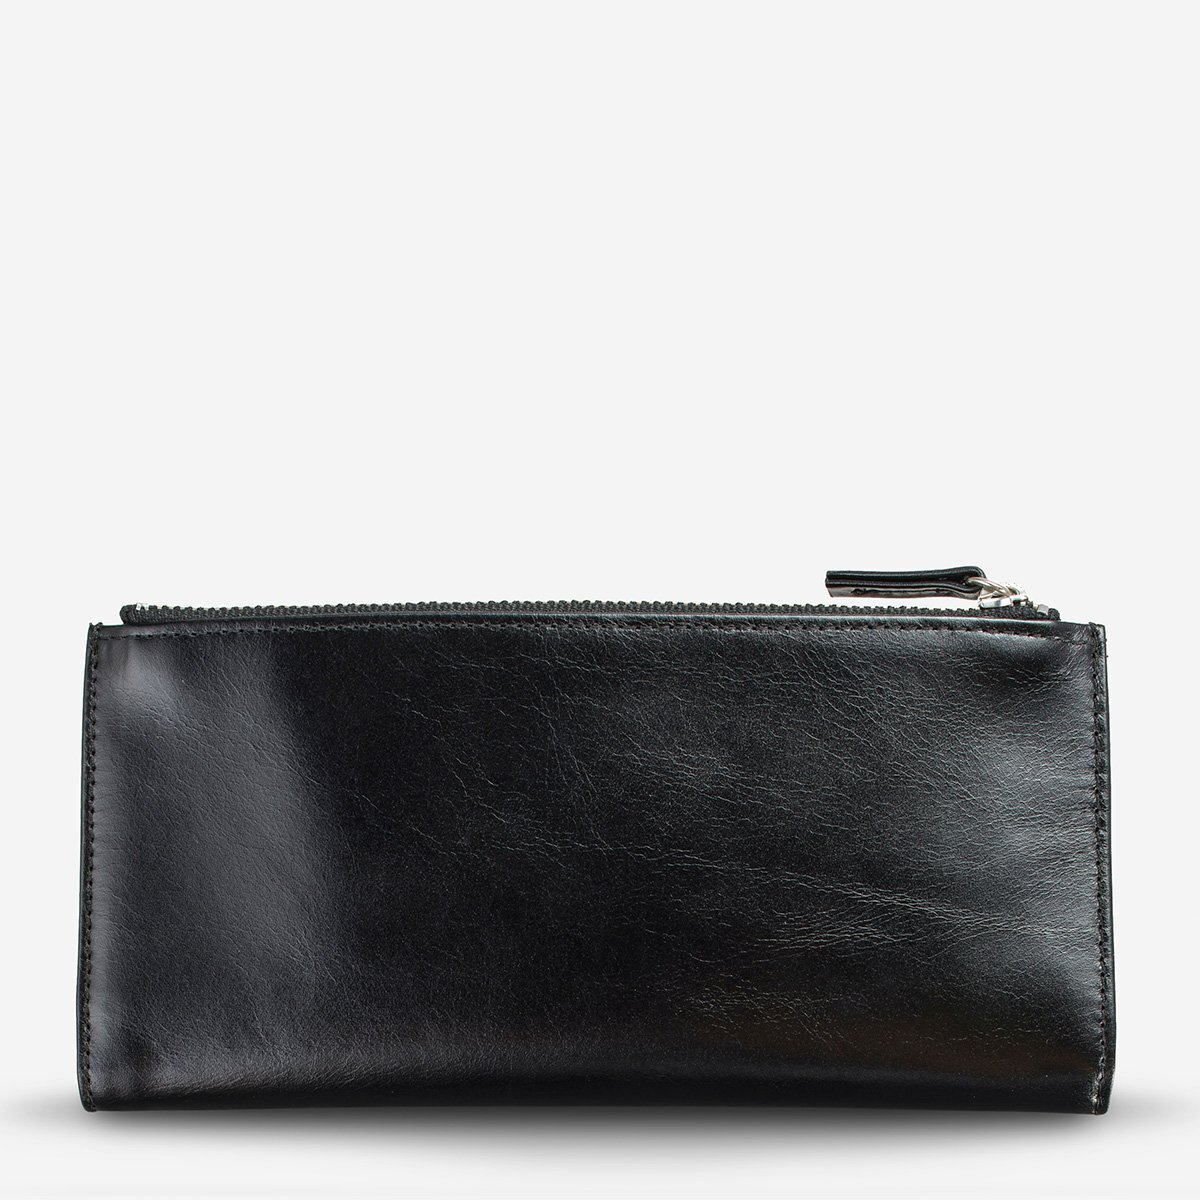 Dakota Wallet (Black) - Accessories-Bags / Wallets : Just Looking ...